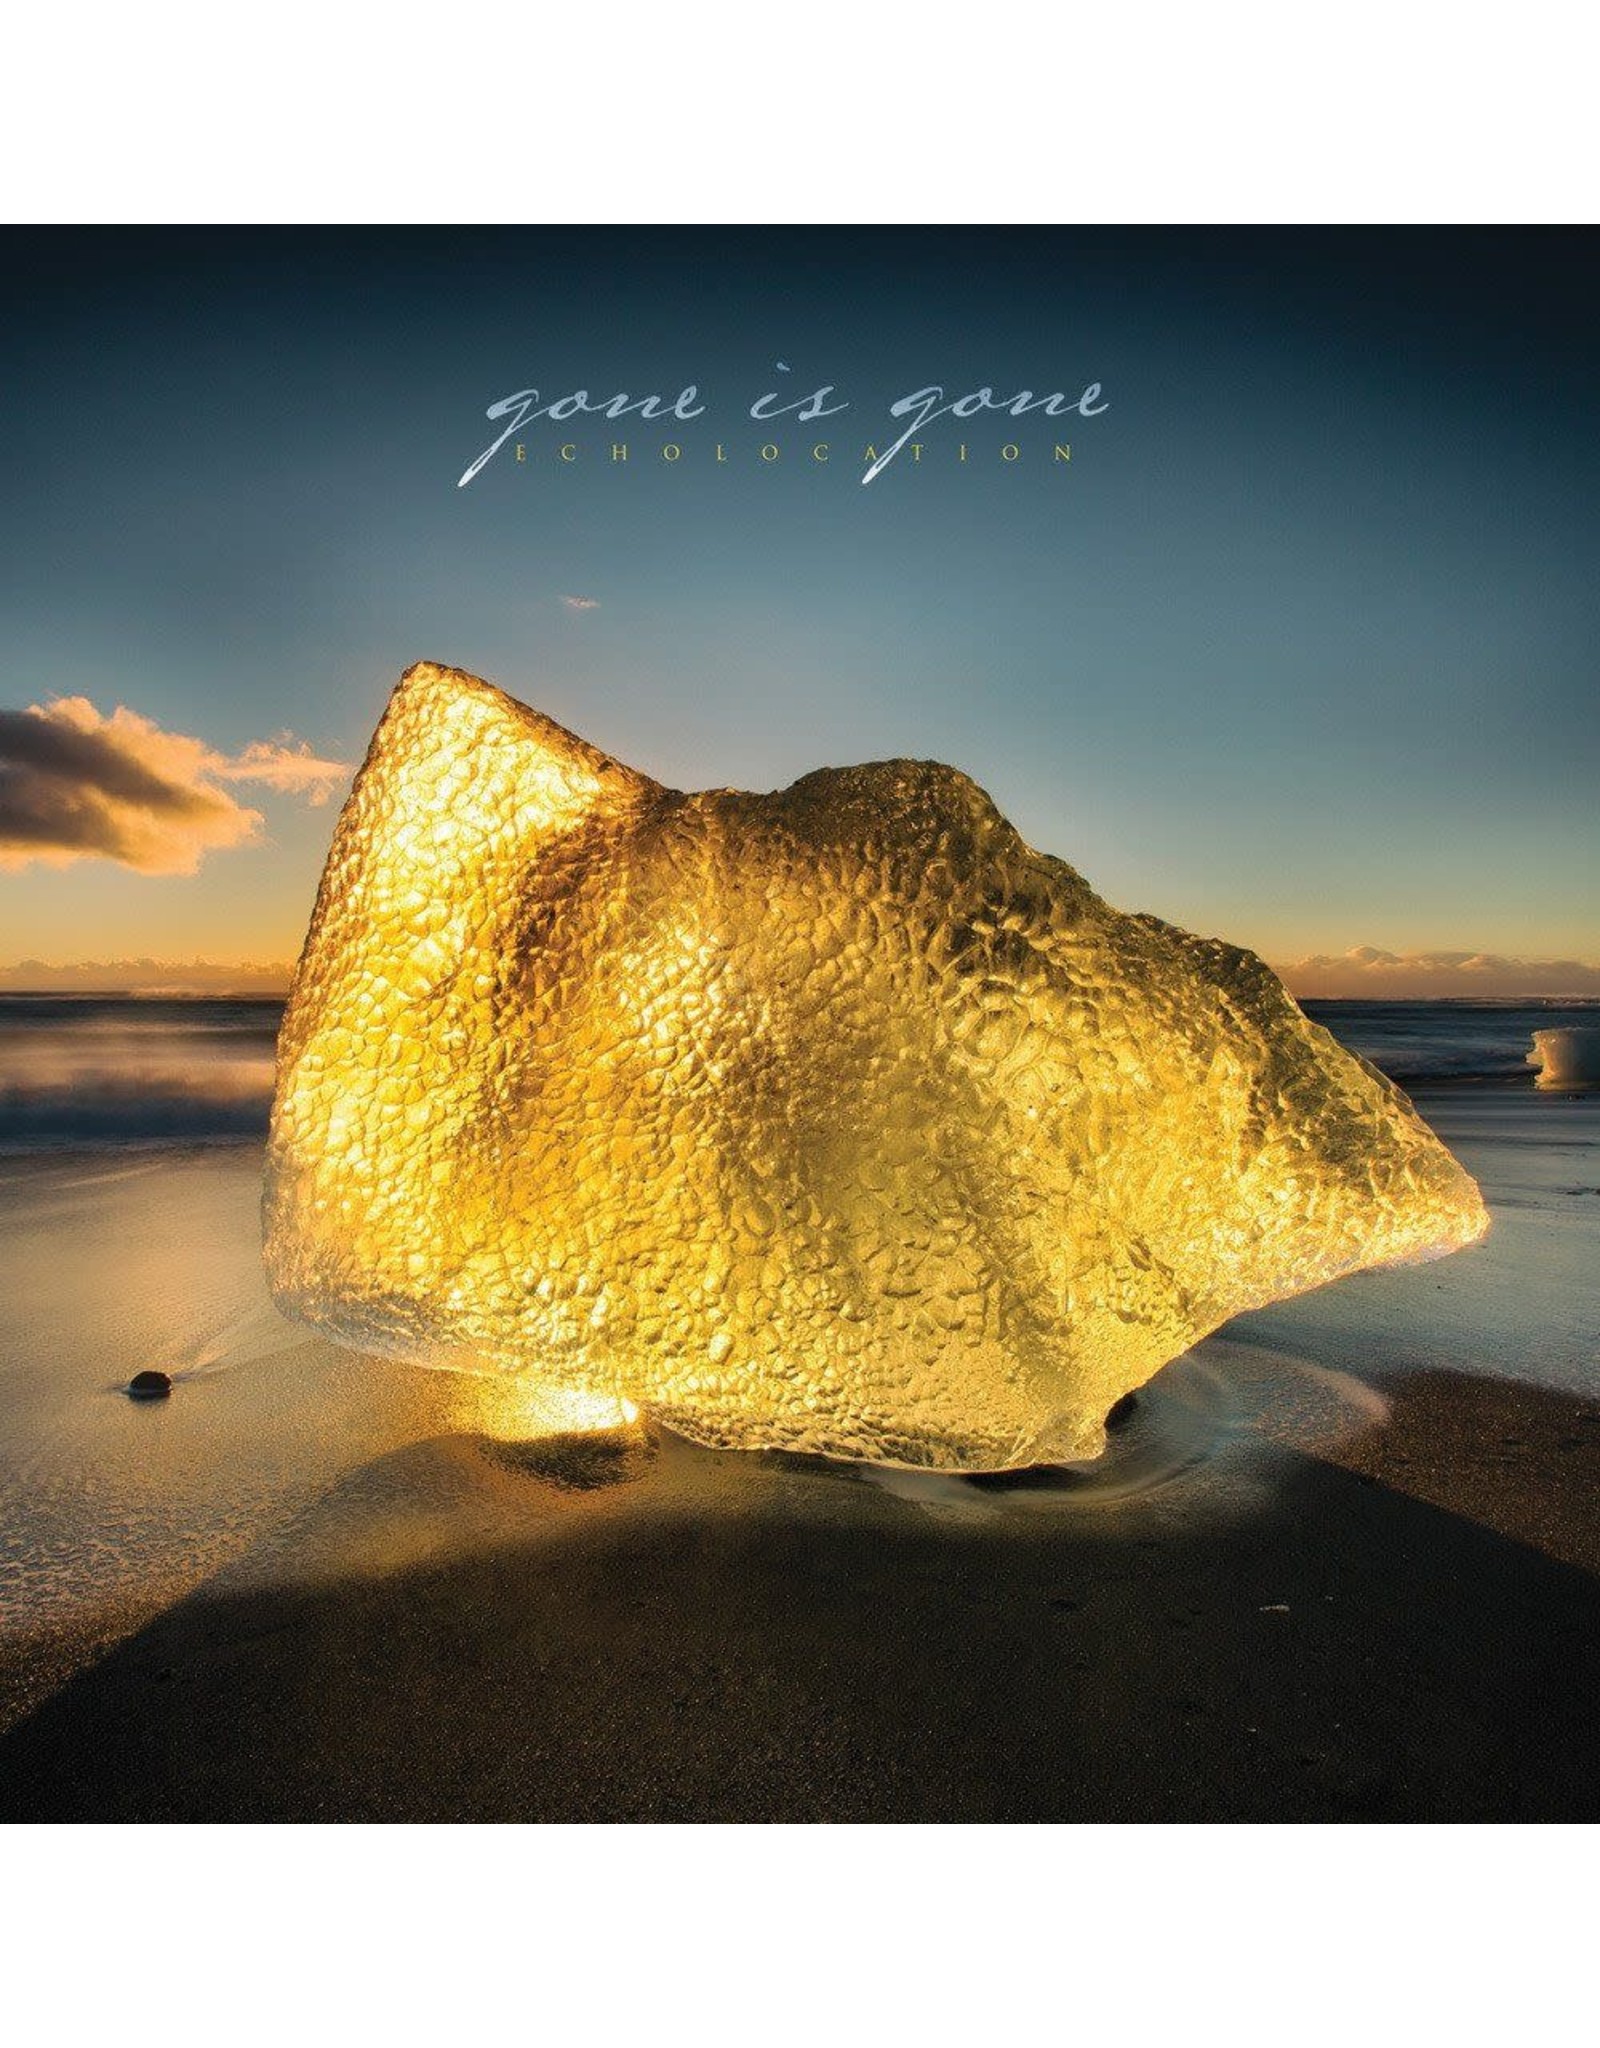 Gone is Gone - Echolocation (ltd first pressing colored vinyl) 2LP